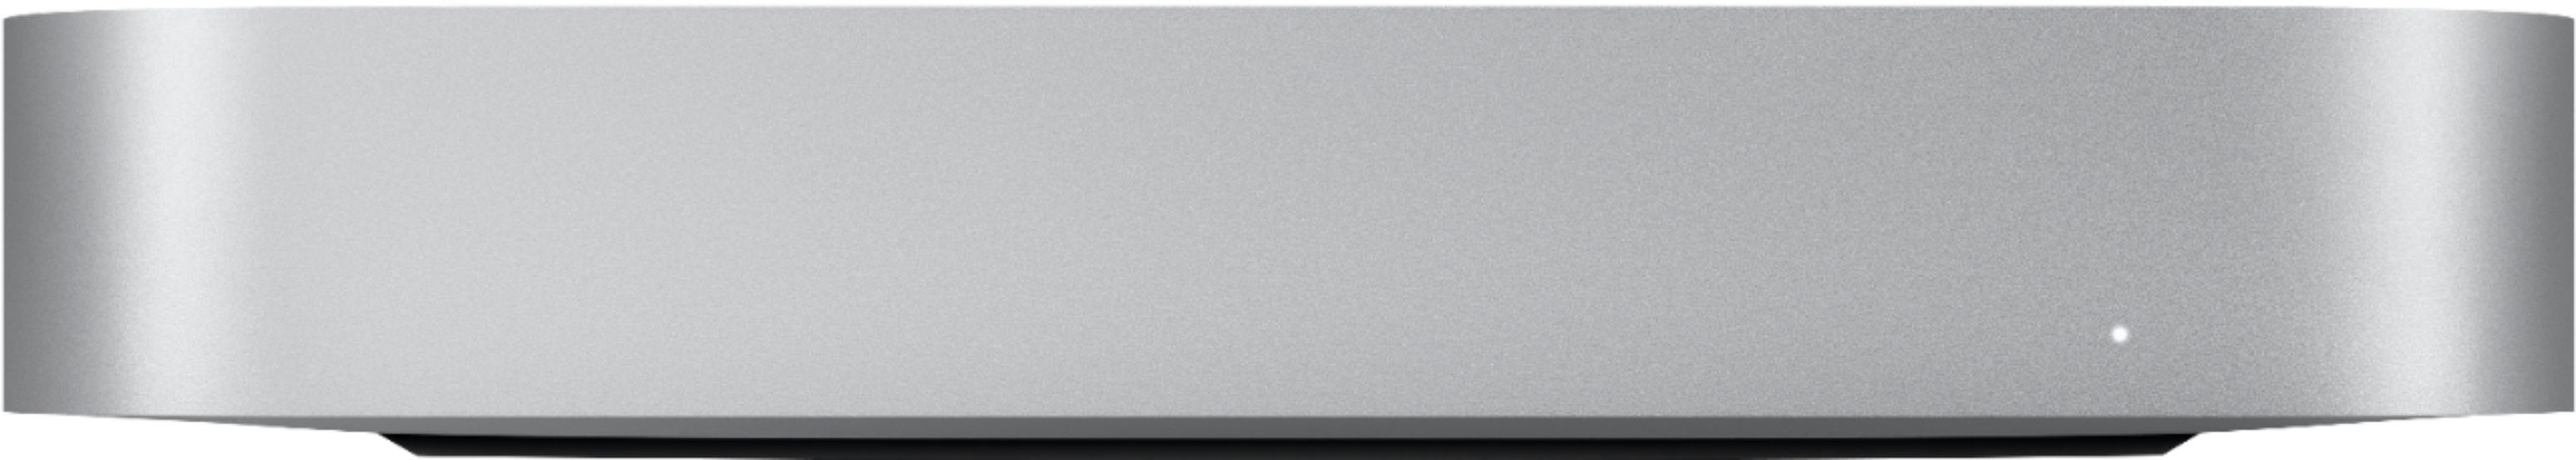 Mac mini Desktop Apple M1 chip 8GB Memory 256GB SSD Silver MGNR3LL 